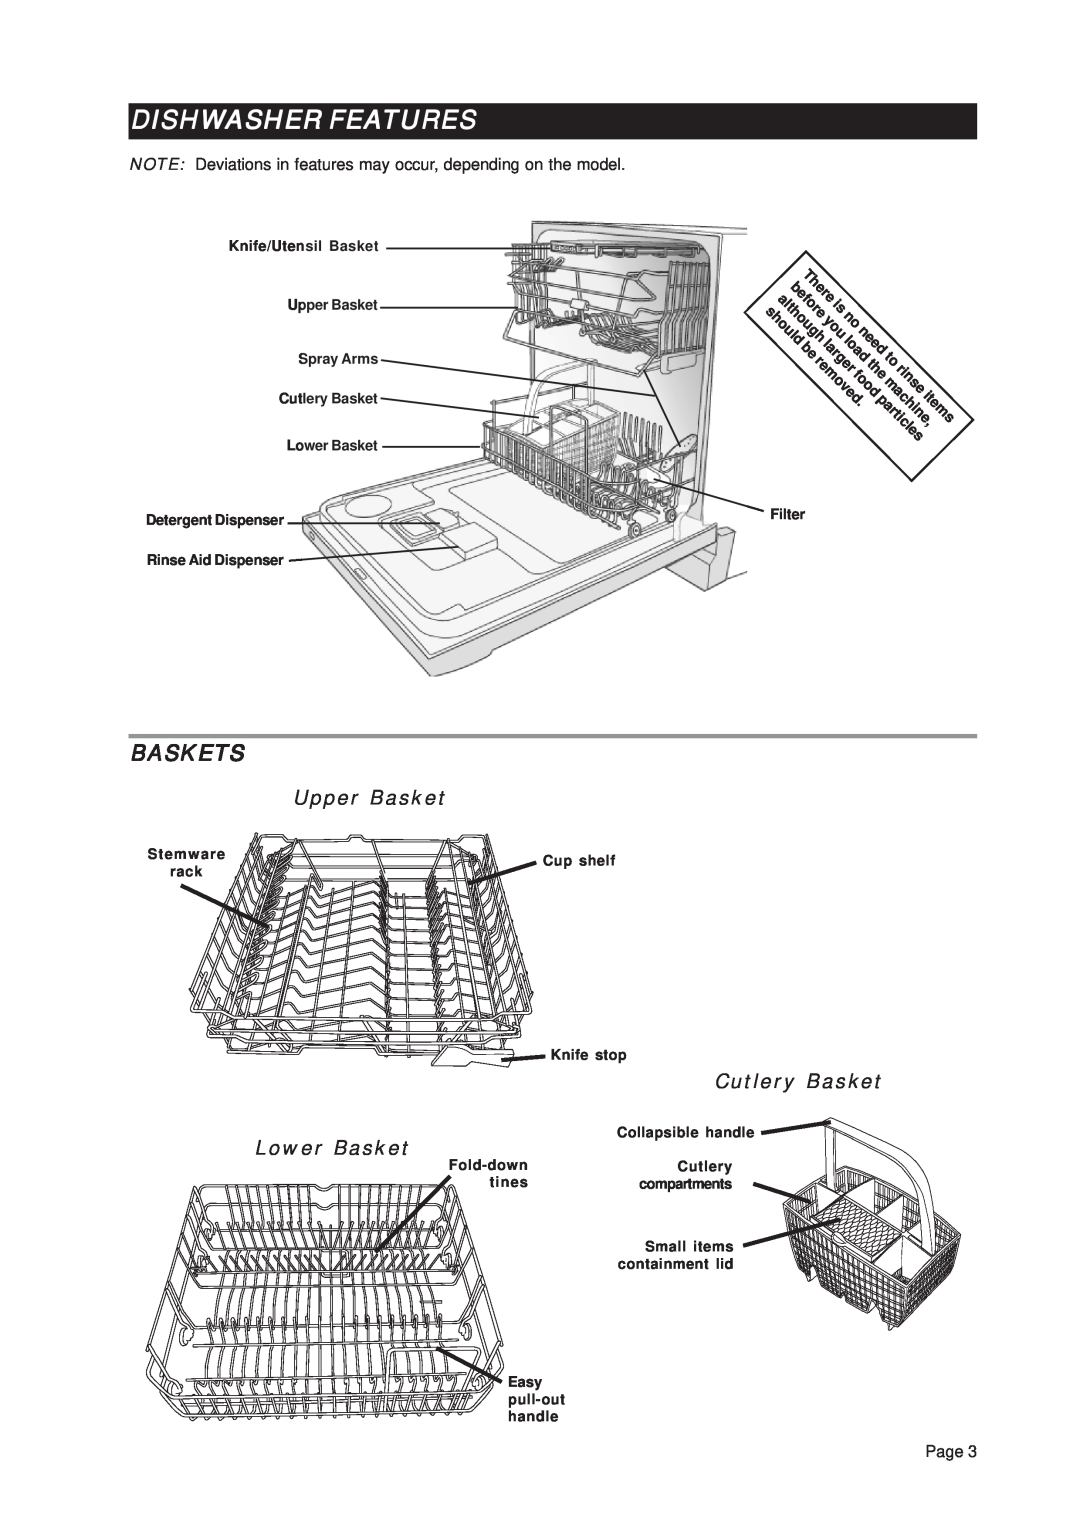 Asko D3432 Dishwasher Features, Baskets, beforeis, rinse, particles, Upper Basket, Cutlery Basket, Lower Basket, although 